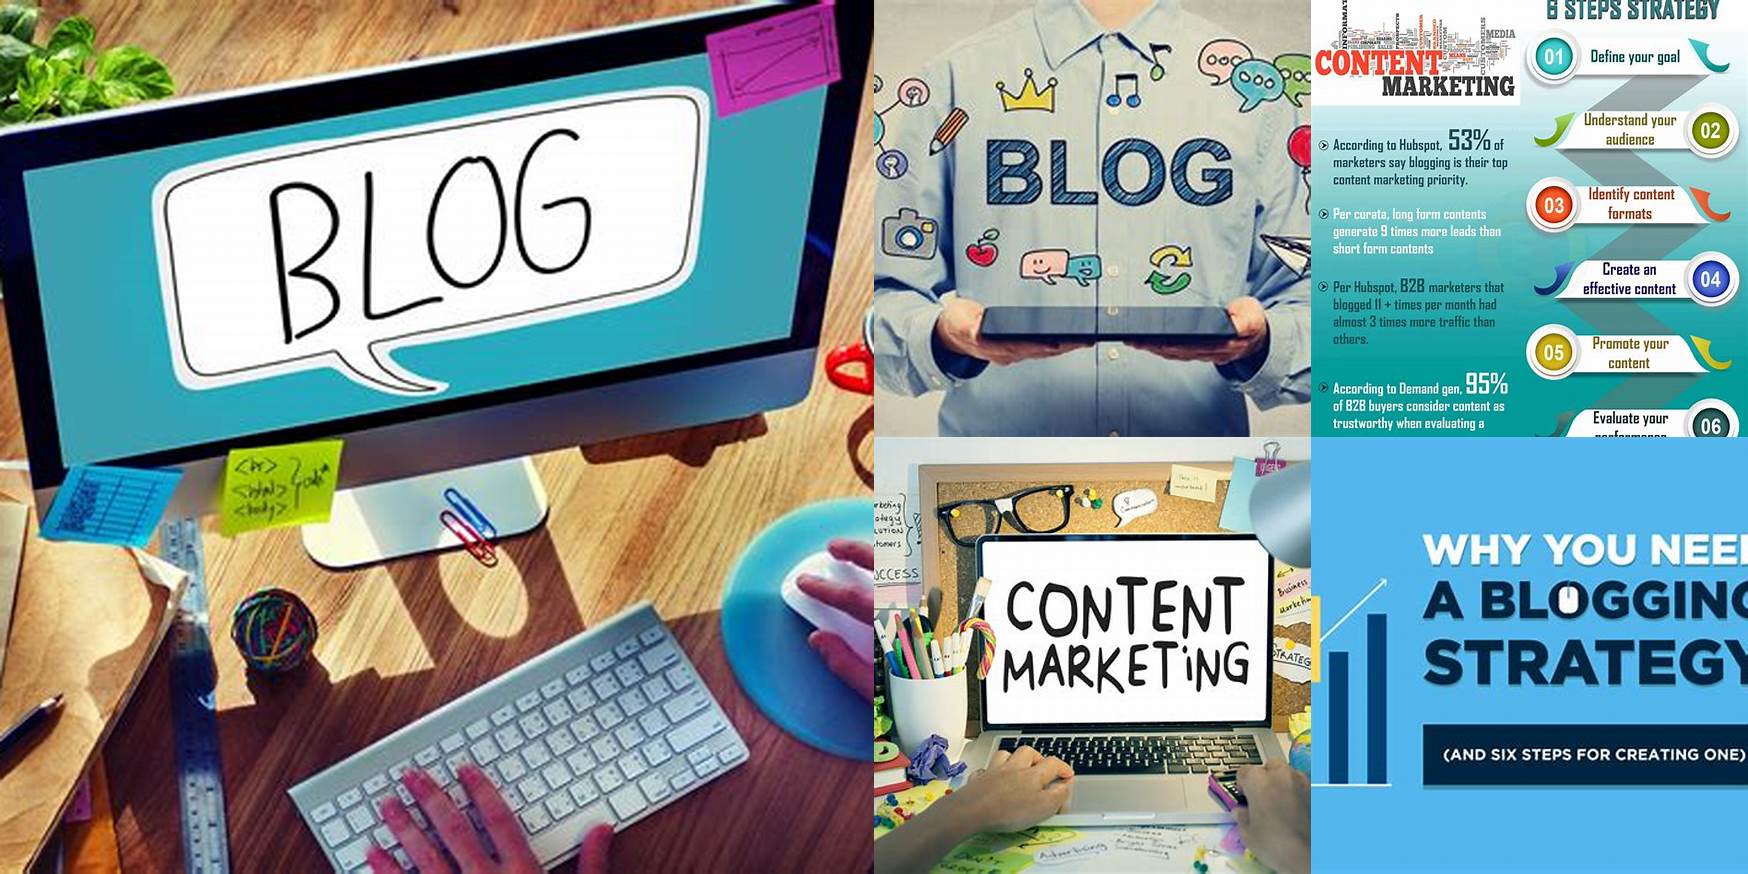 Blogging strategi content marketing untuk blog